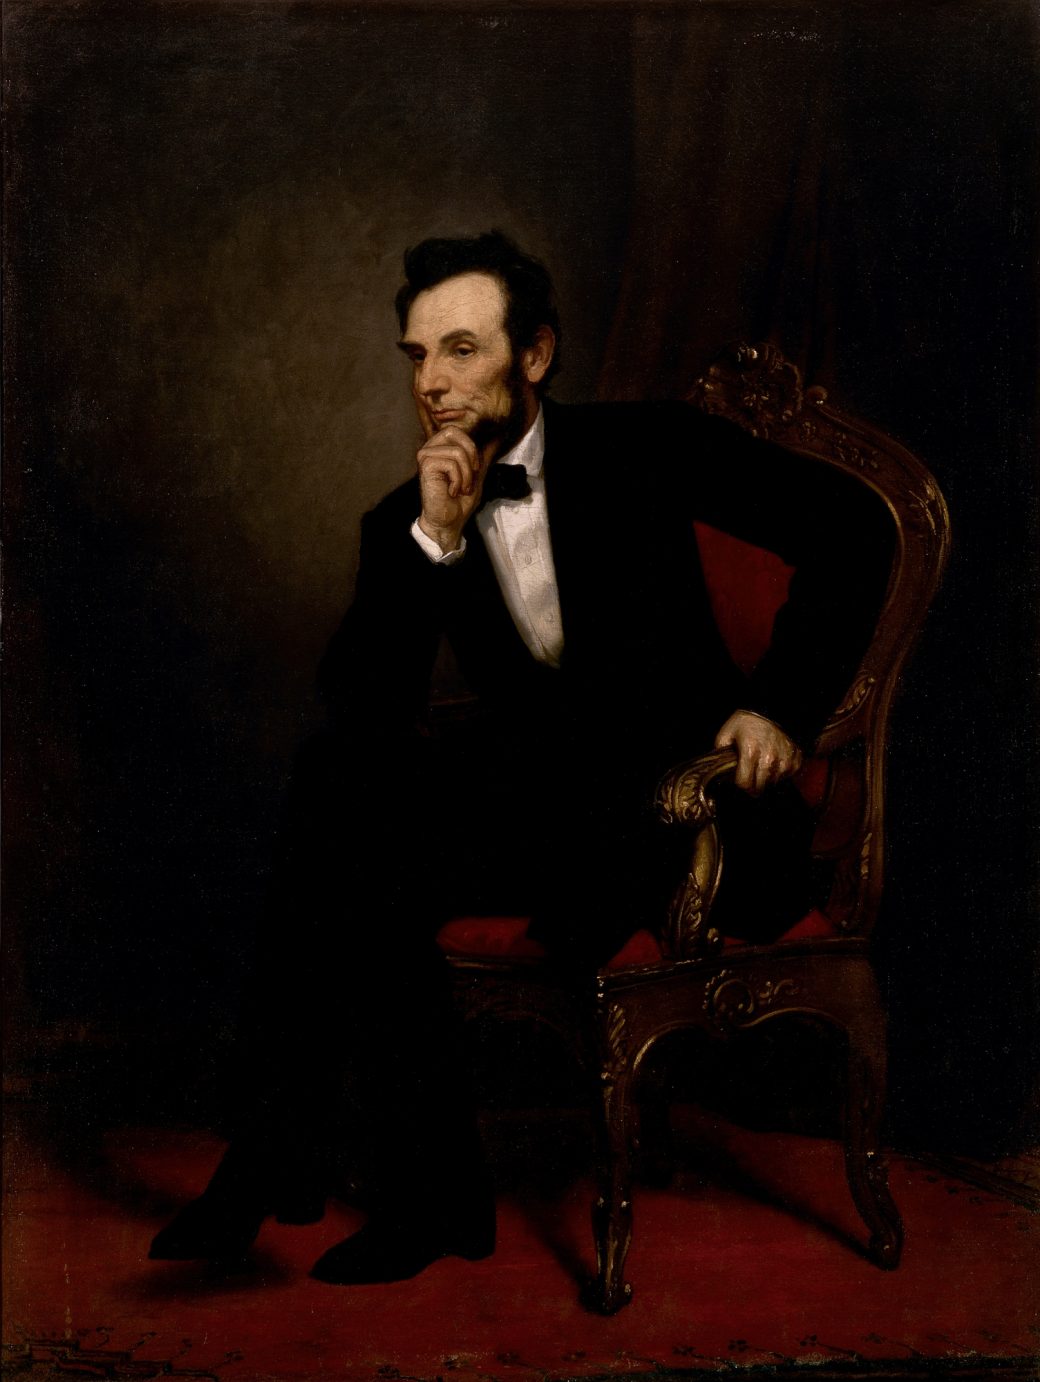 portrait of Abraham Lincoln